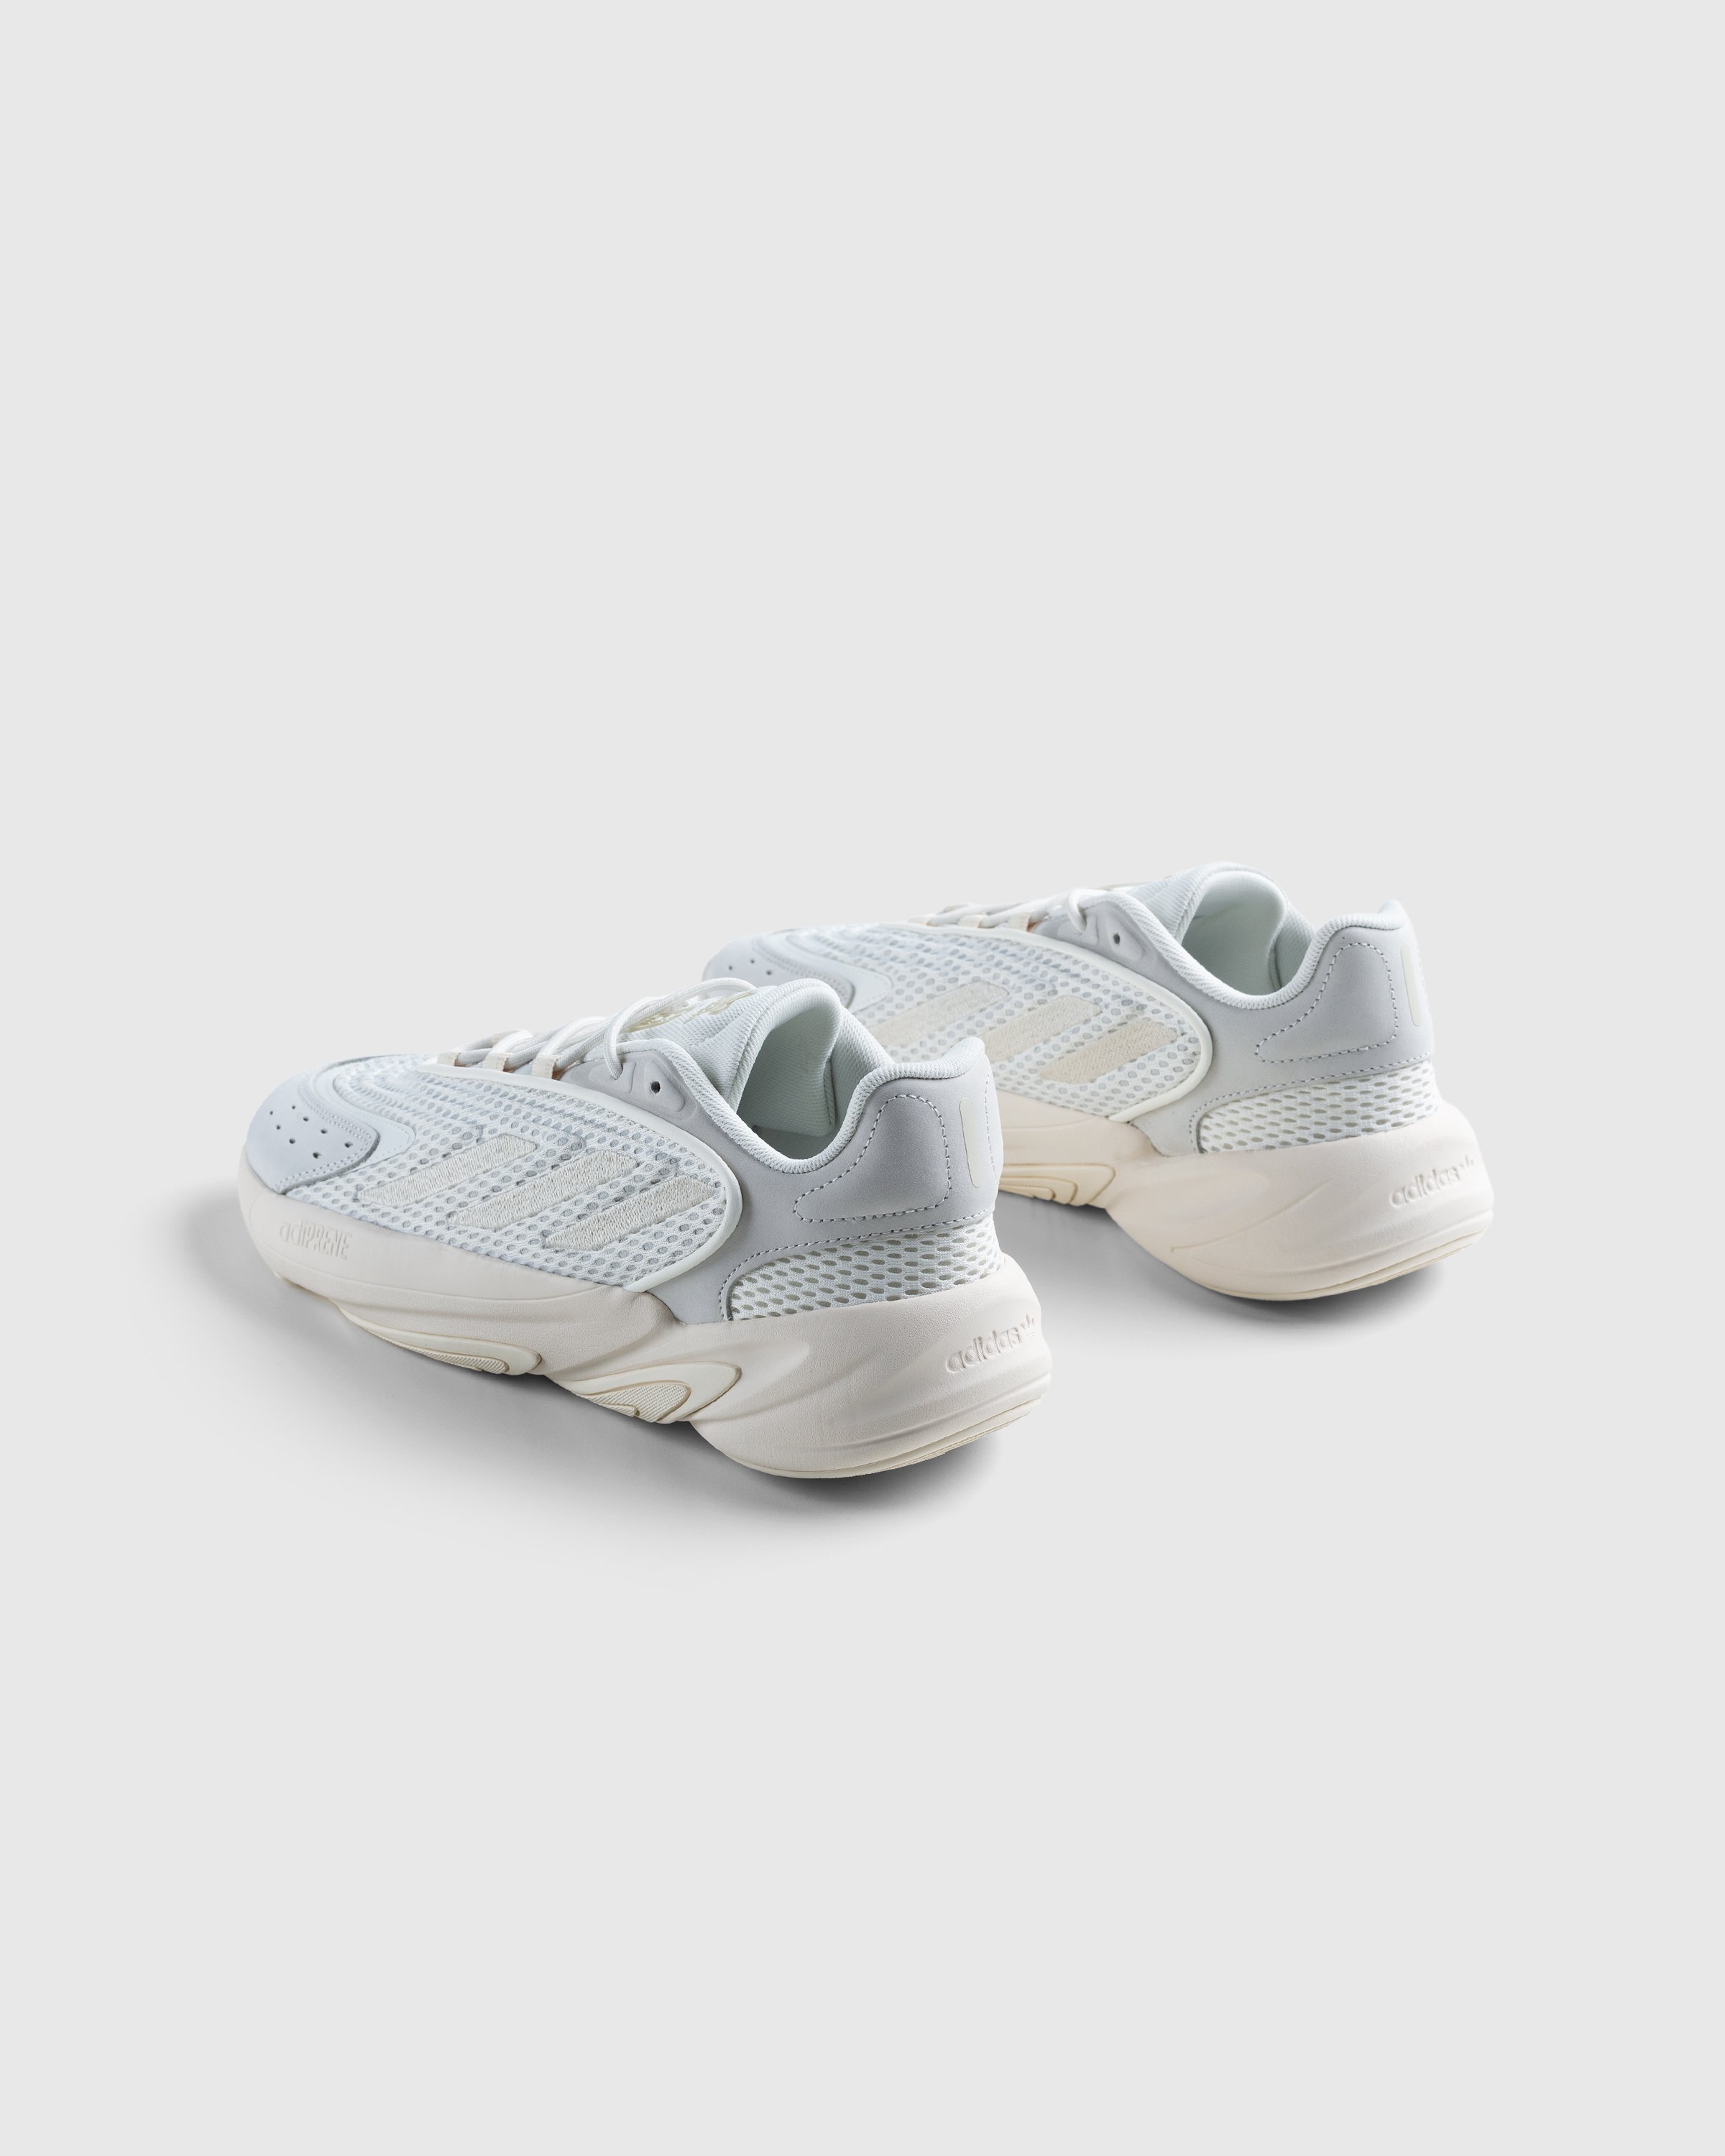 Adidas - Ozelia Off White/White - Footwear - Beige - Image 4